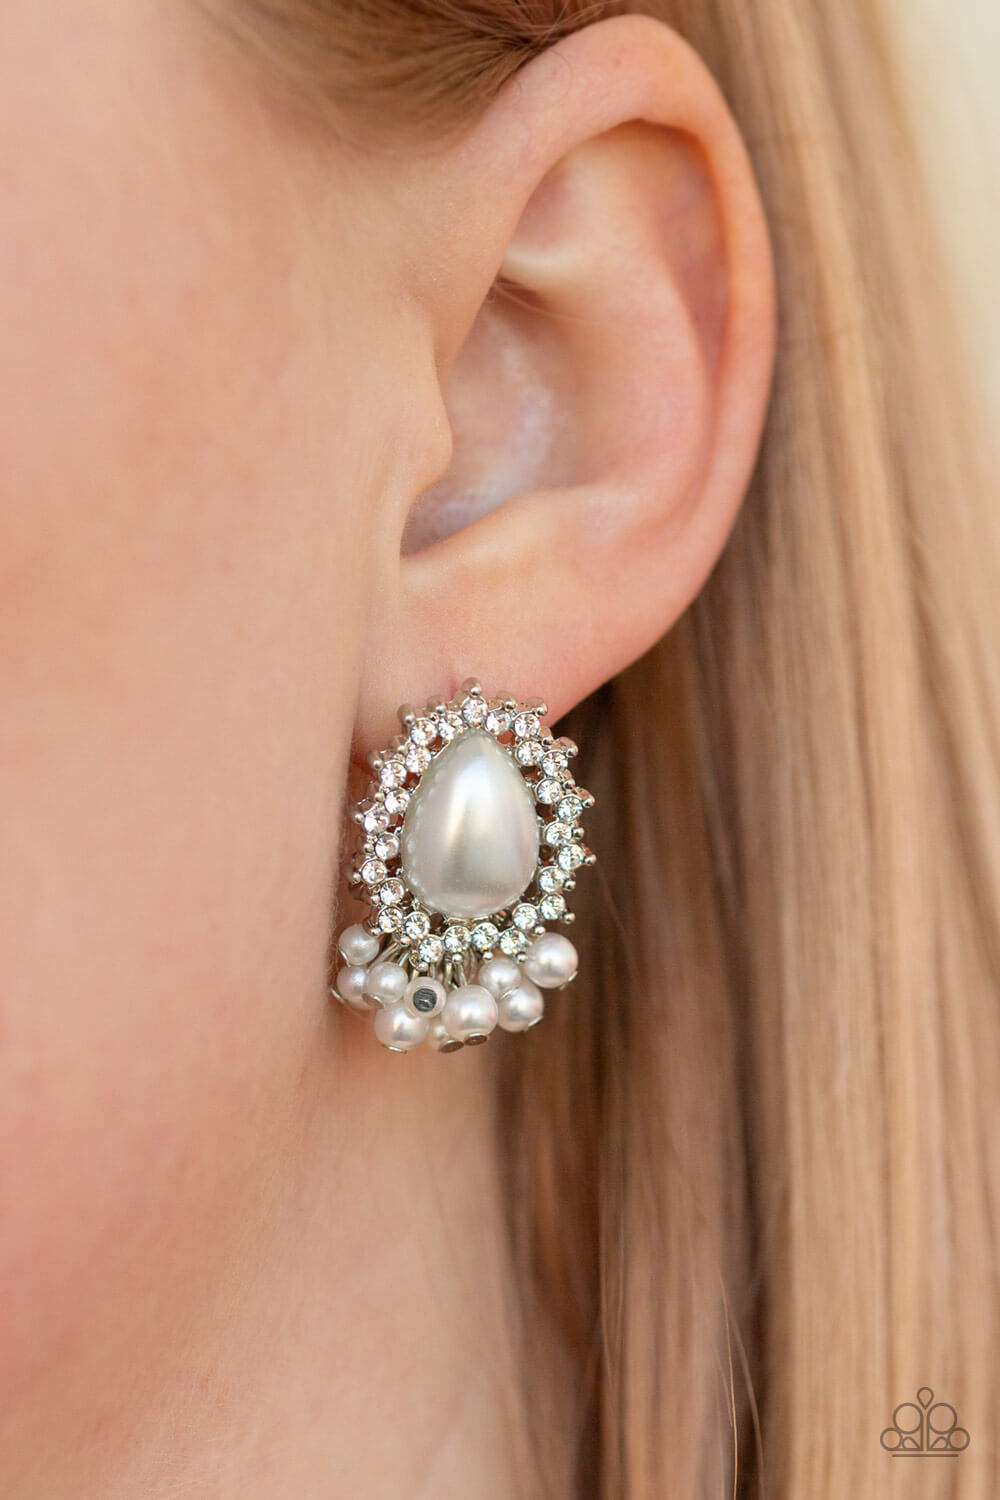 Castle Cameo - White Earrings - Princess Glam Shop